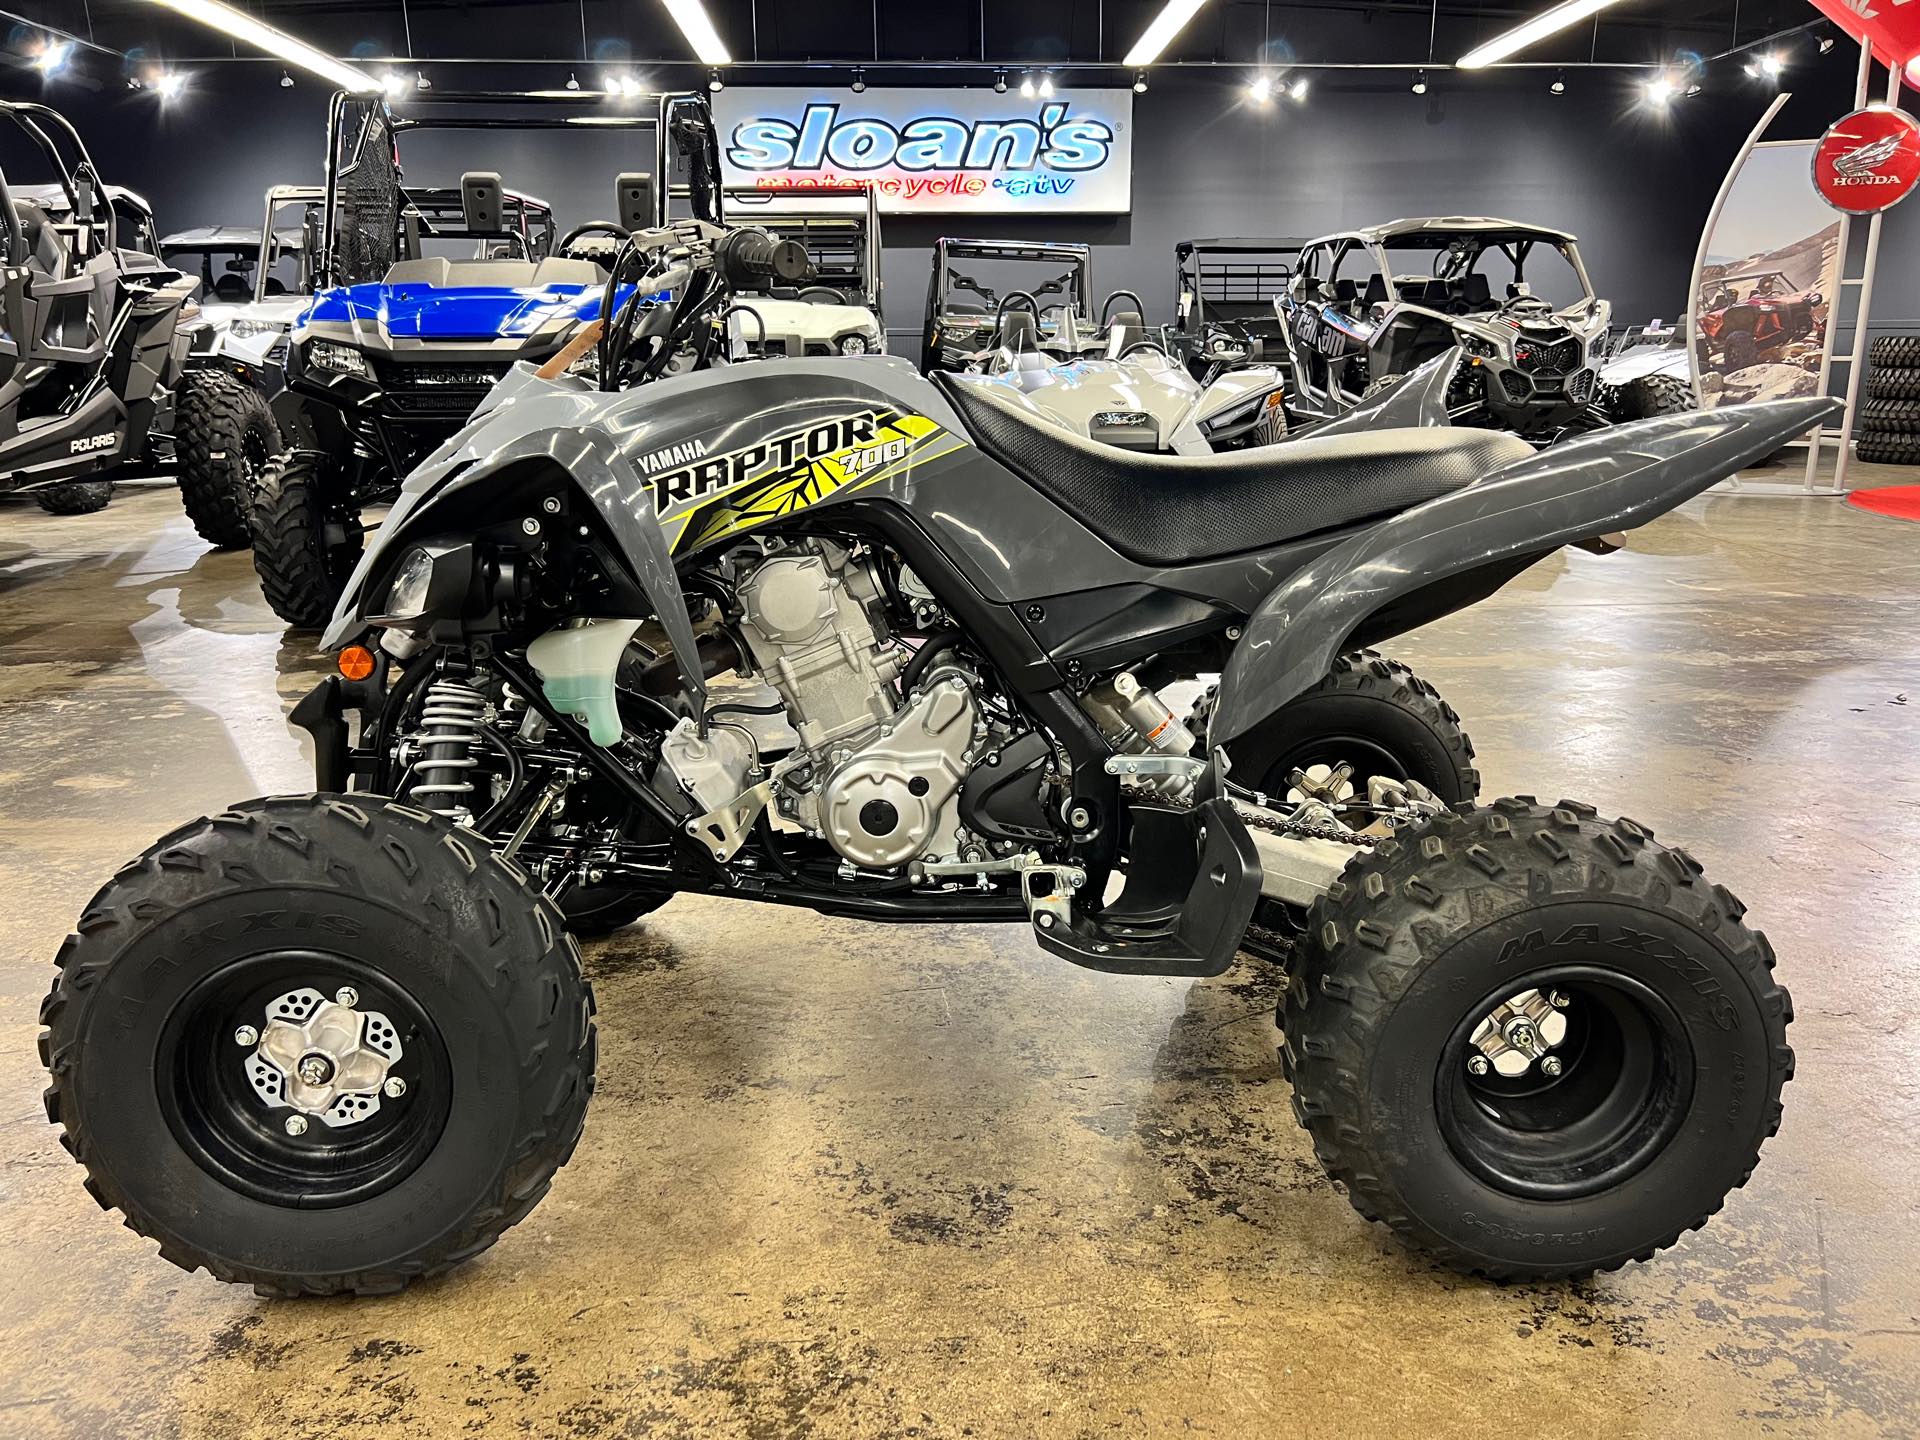 2019 Yamaha Raptor 700 at Sloans Motorcycle ATV, Murfreesboro, TN, 37129